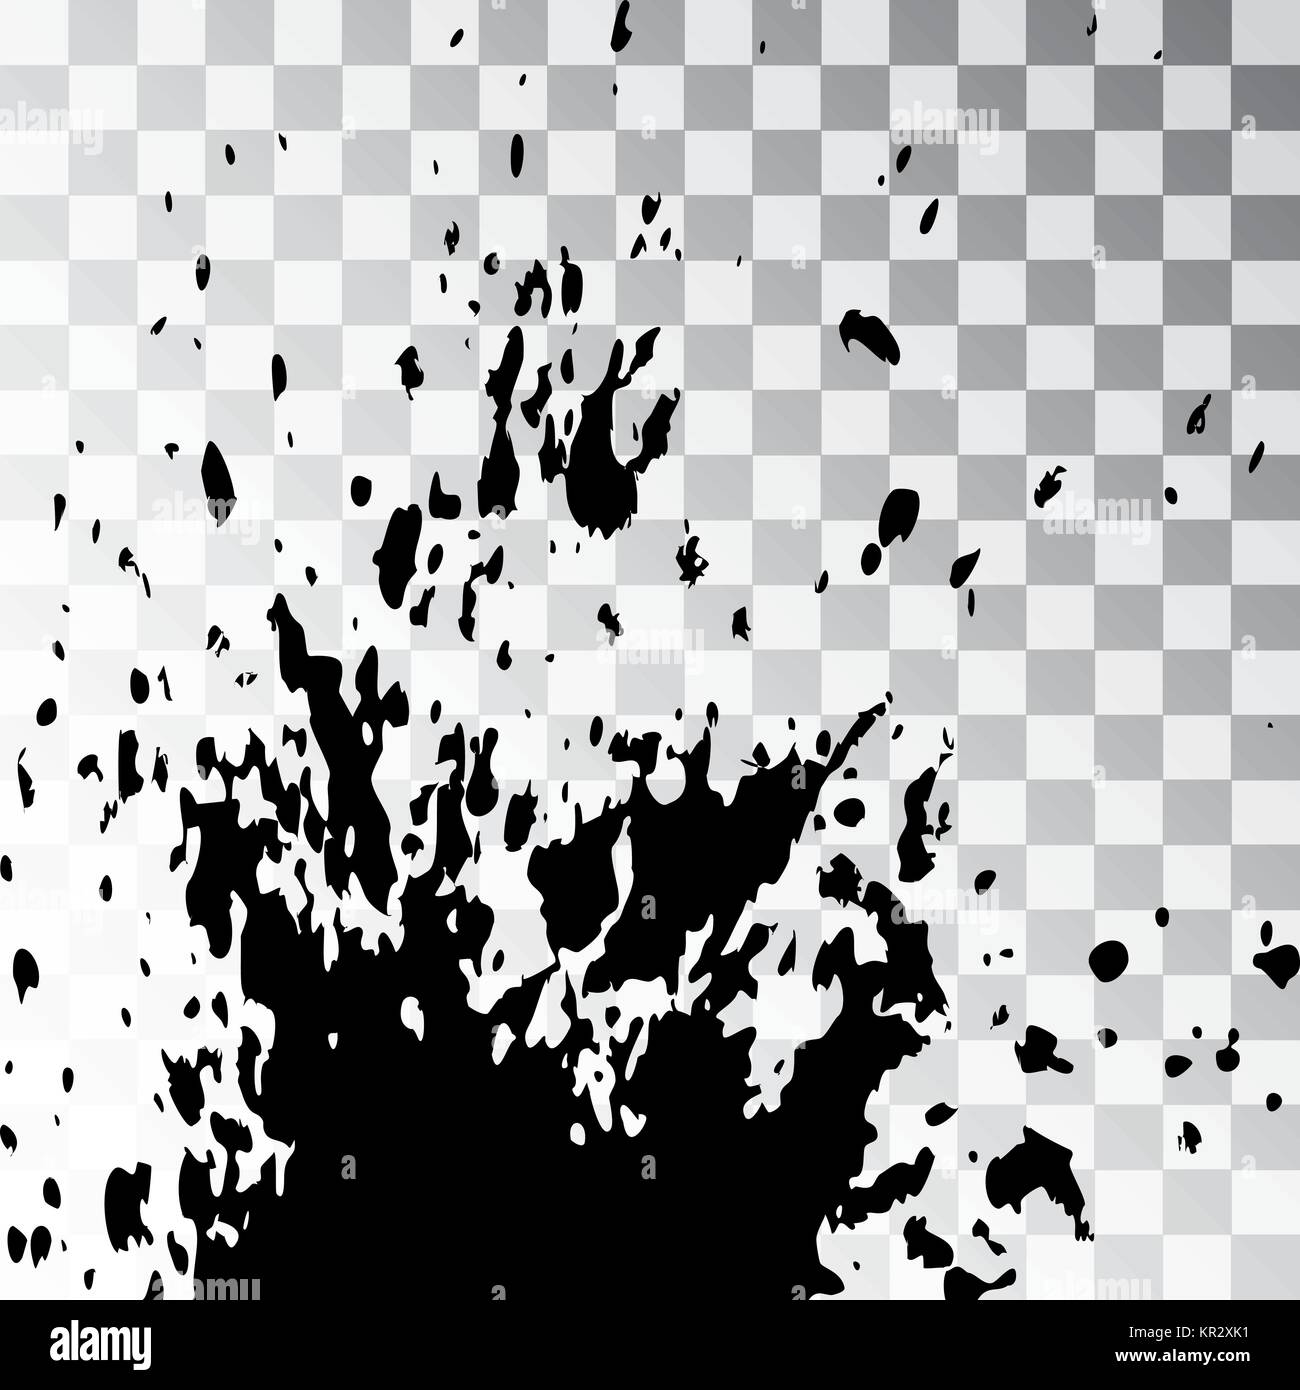 Black Ink Paint Explosion Splatter Artistic Cover Design Sketch Stock Vector Image Art Alamy